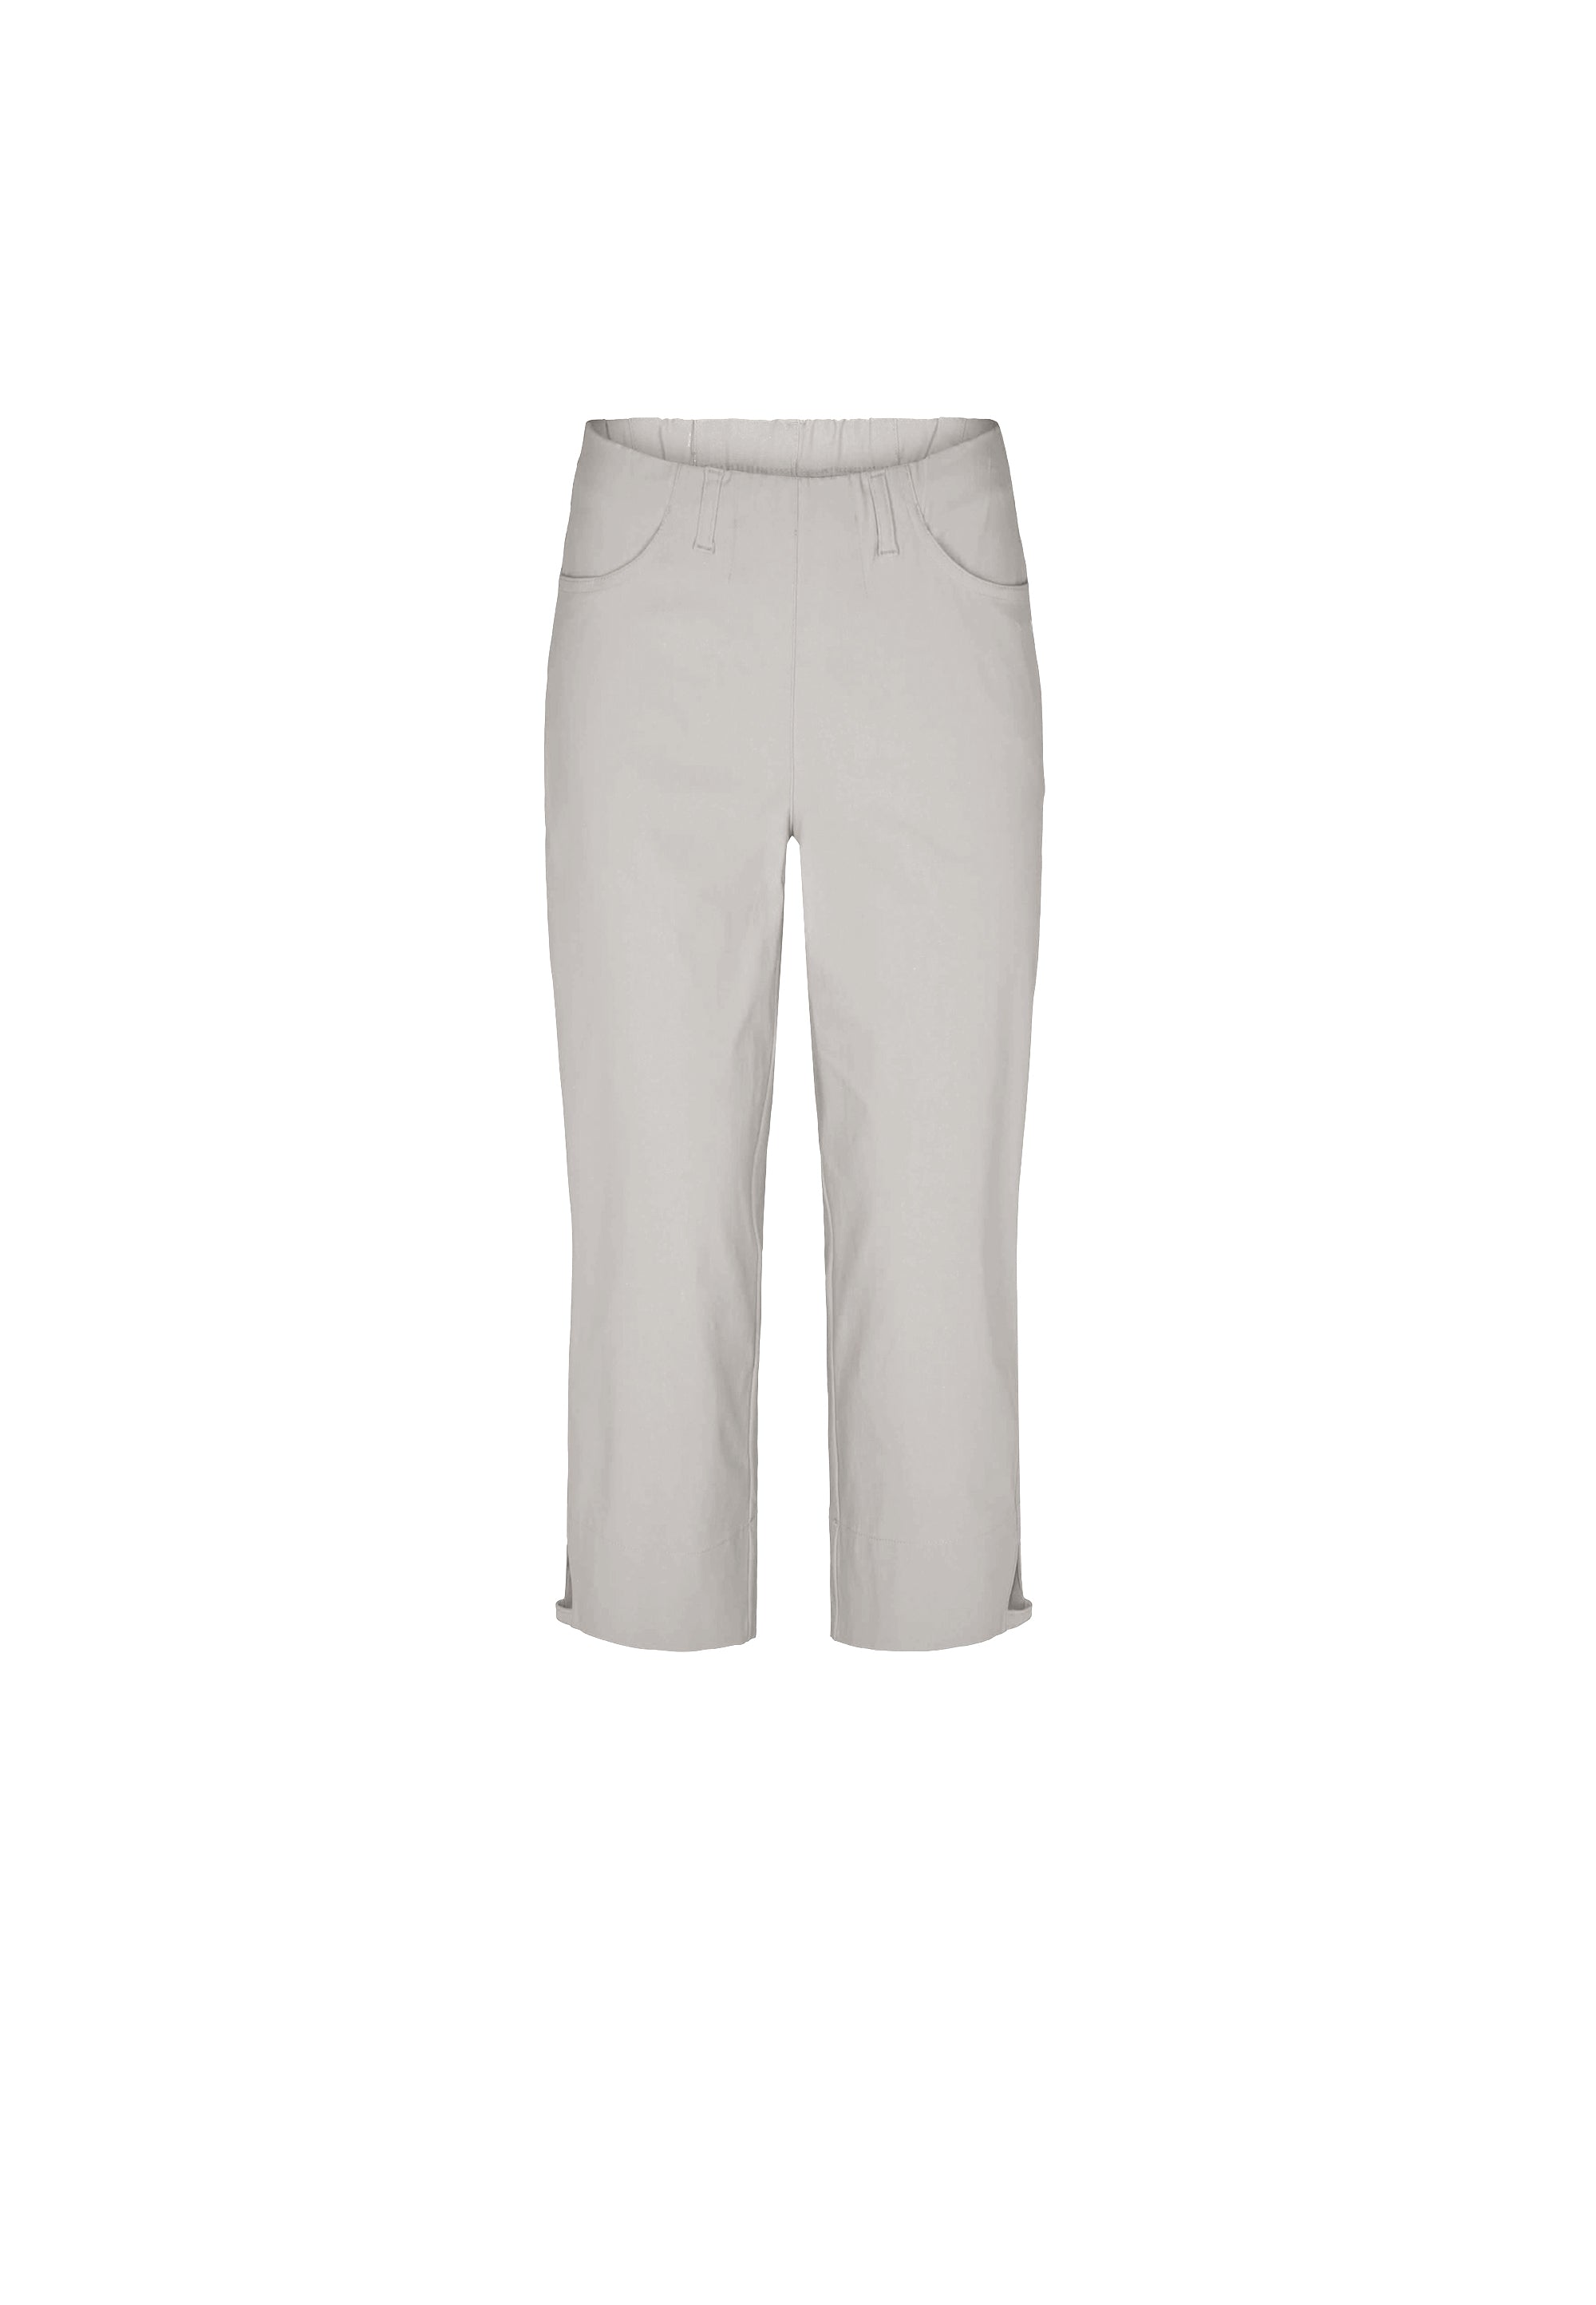 LAURIE  Anabelle Regular Capri ML Trousers REGULAR 25137 Grey Sand